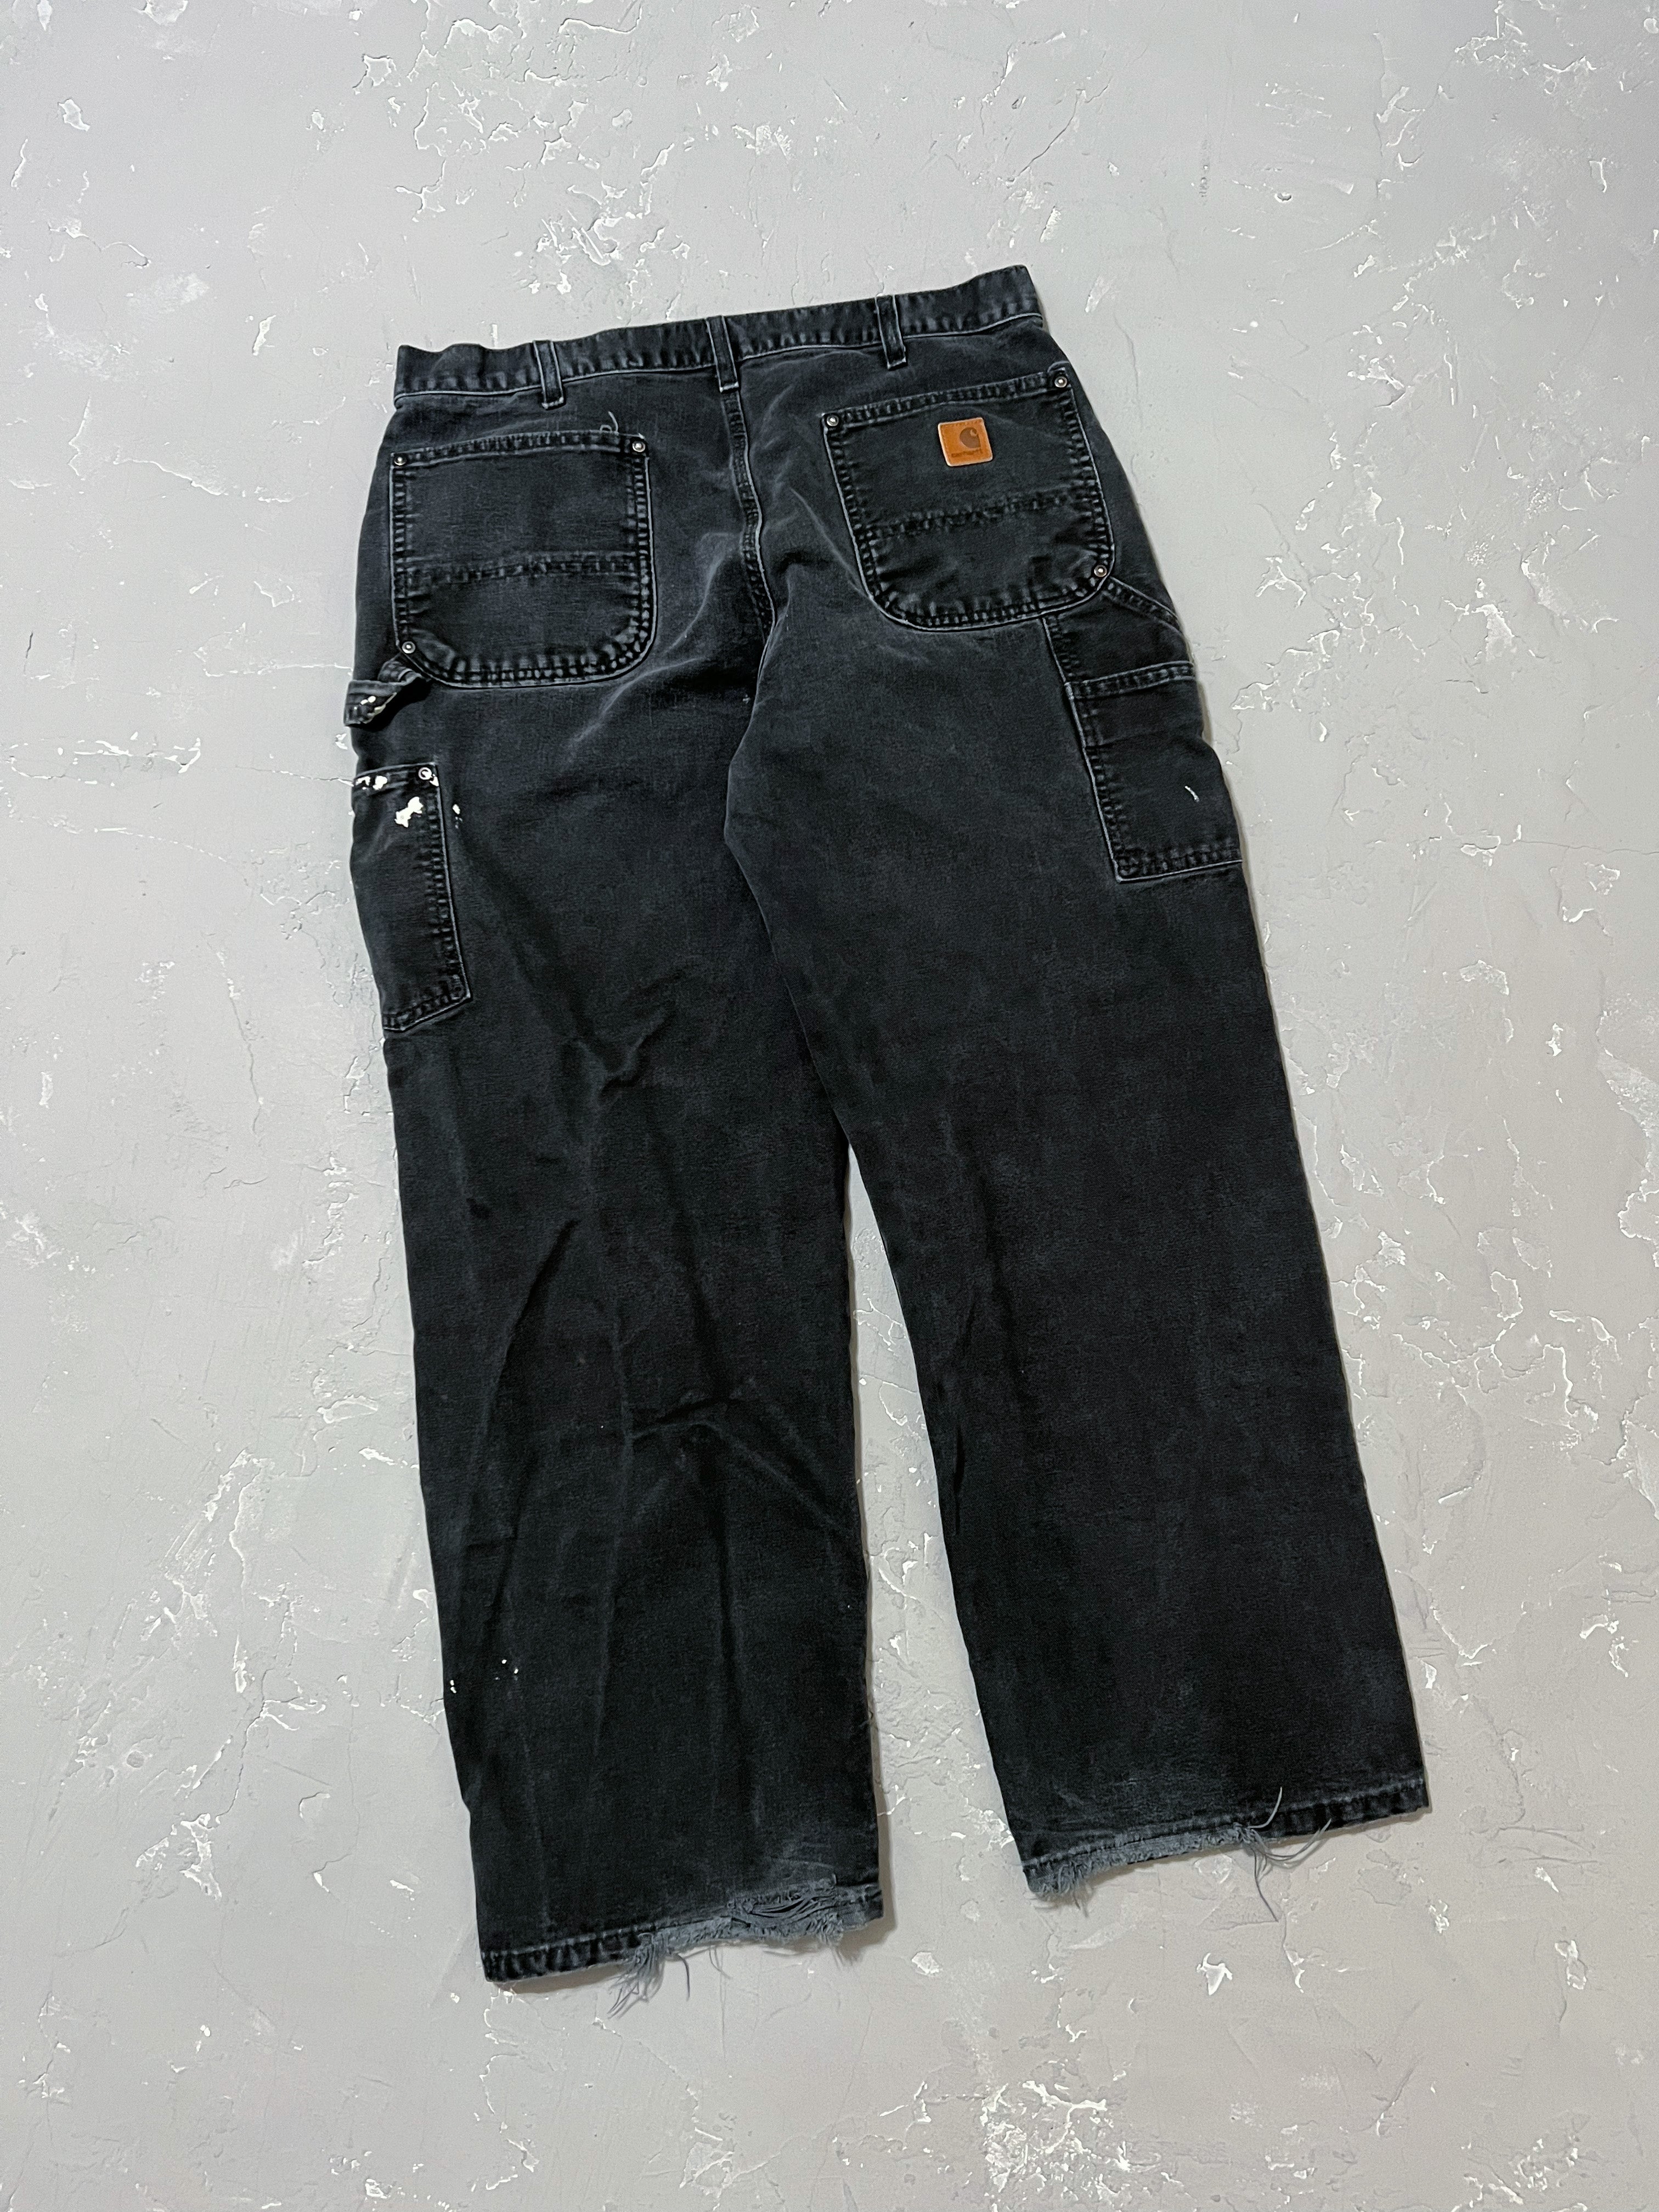 Carhartt Faded Black Double Knee Pants [35 x 30]